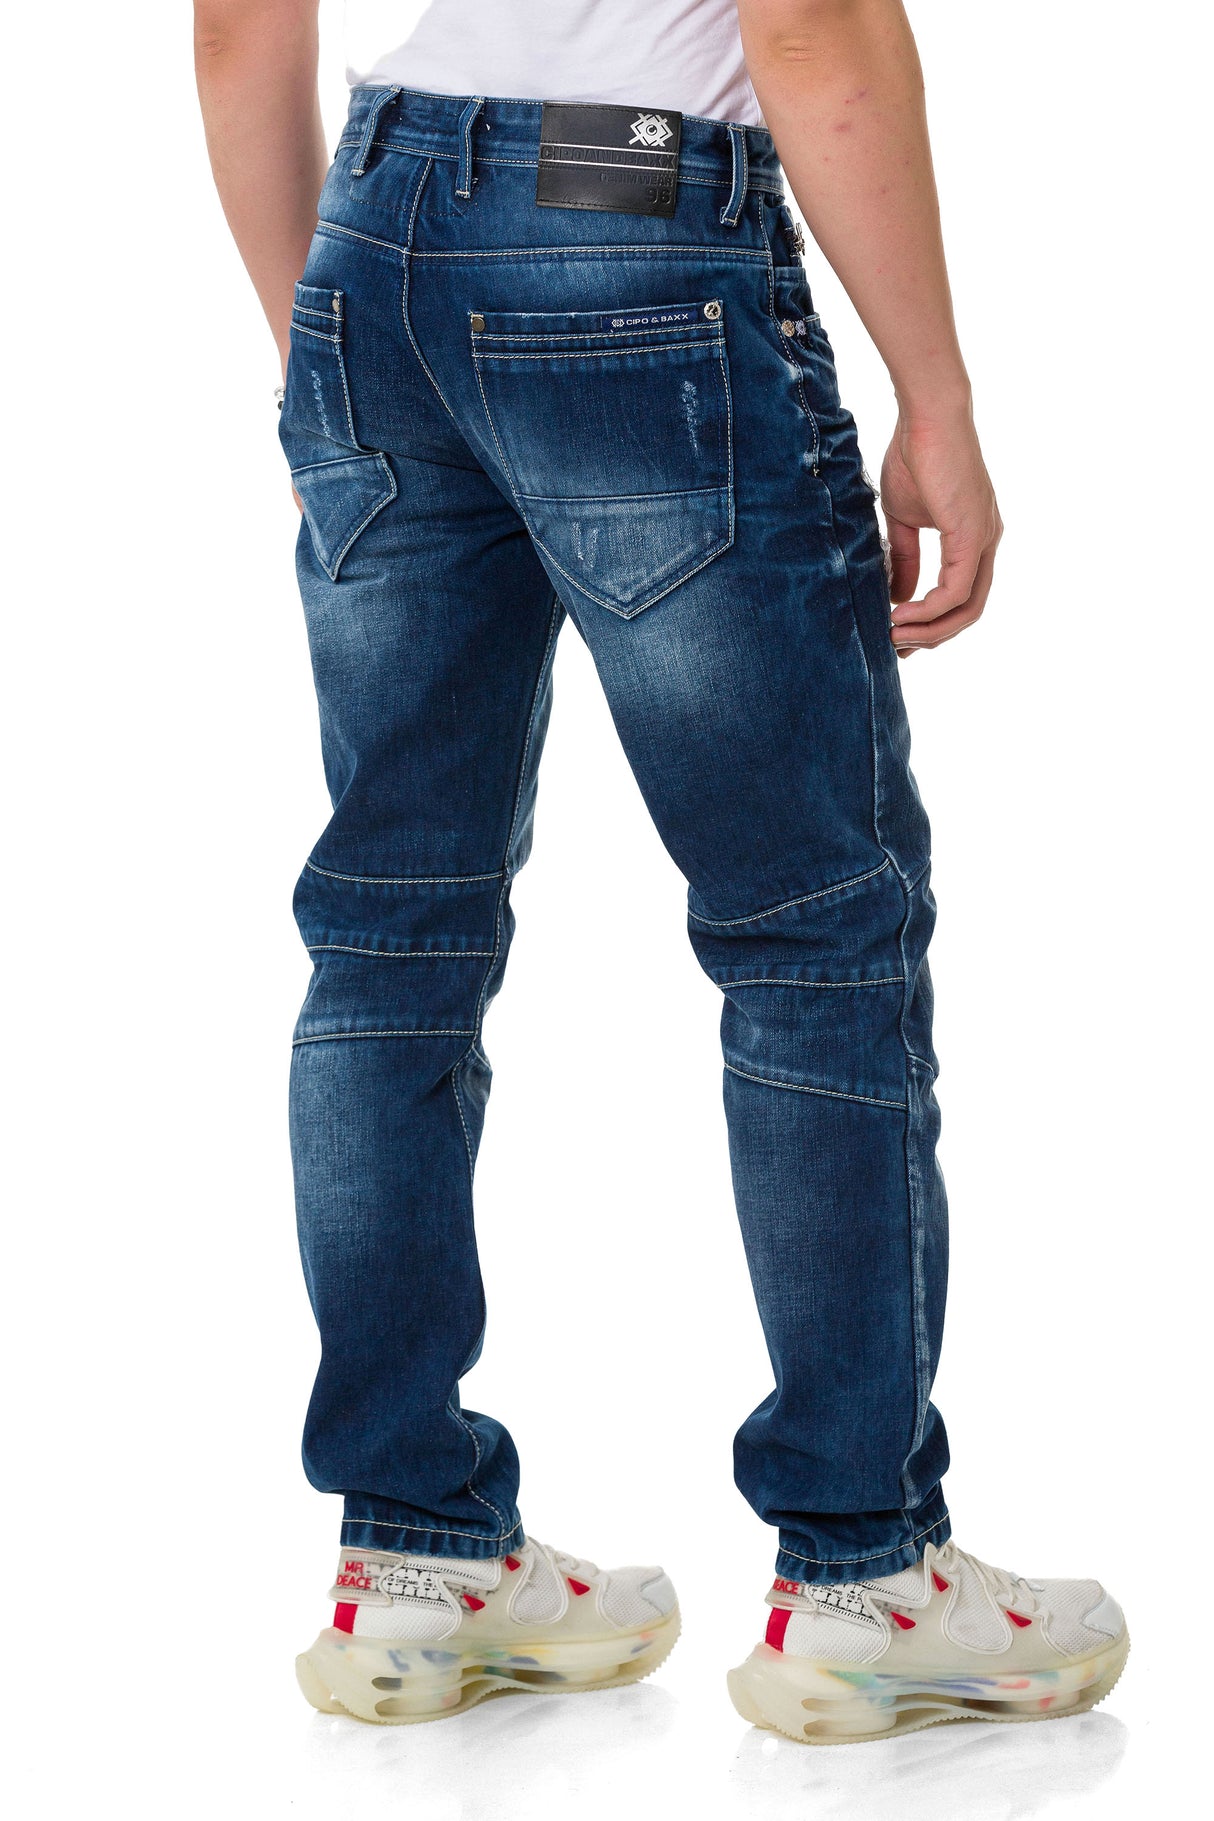 CD838 Men's Jeans